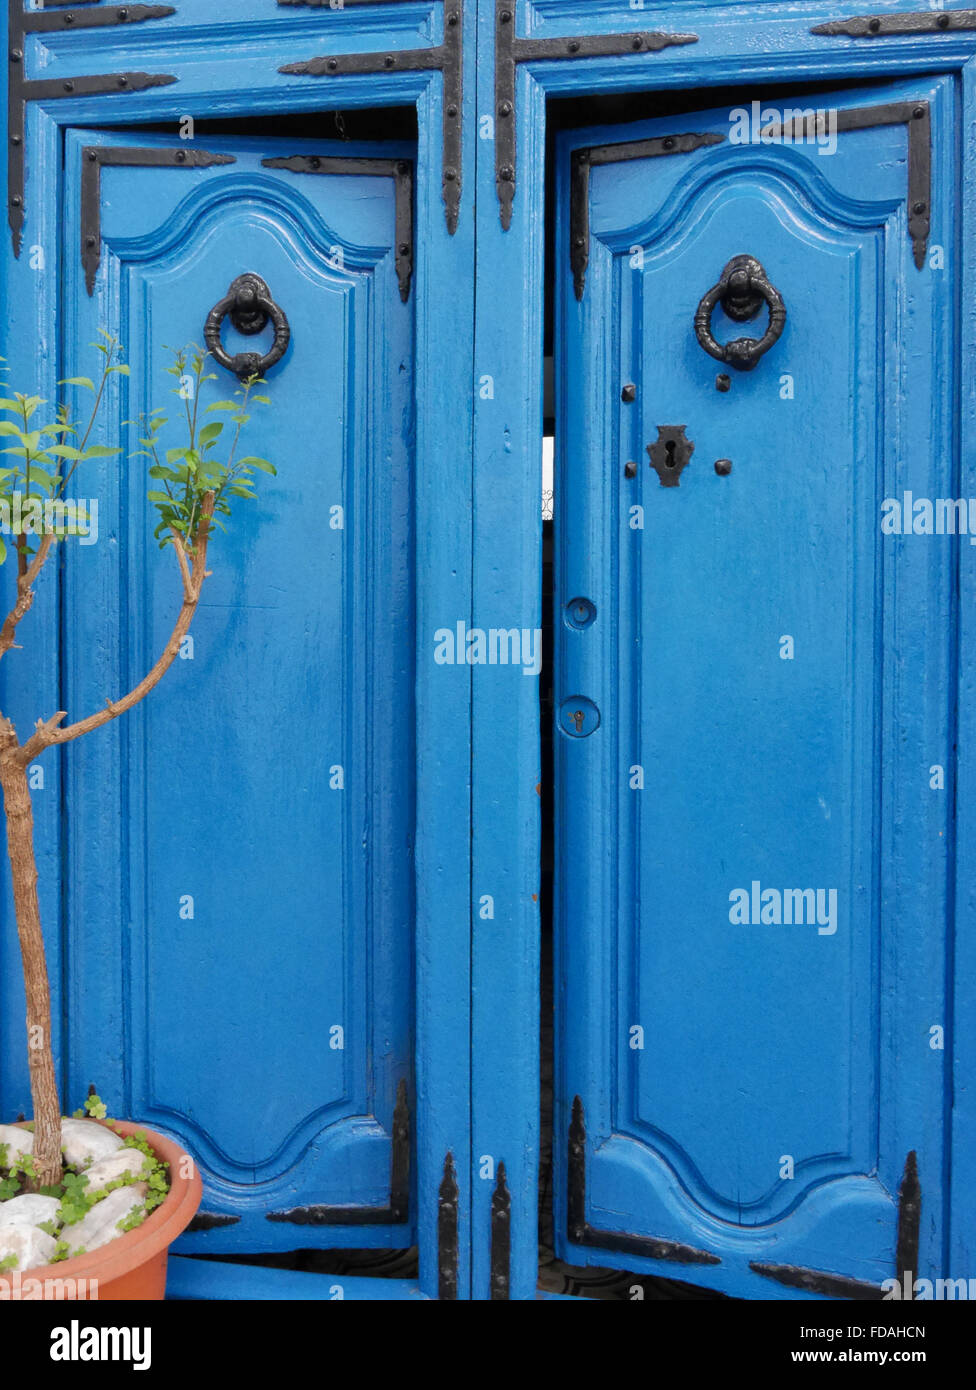 Paar dekorative blaue Türen mit zwei großen ringförmigen Klopfern und schwarzen Metallwinkeln, Frigiliana, Malaga, Andalusien, Spanien. Stockfoto